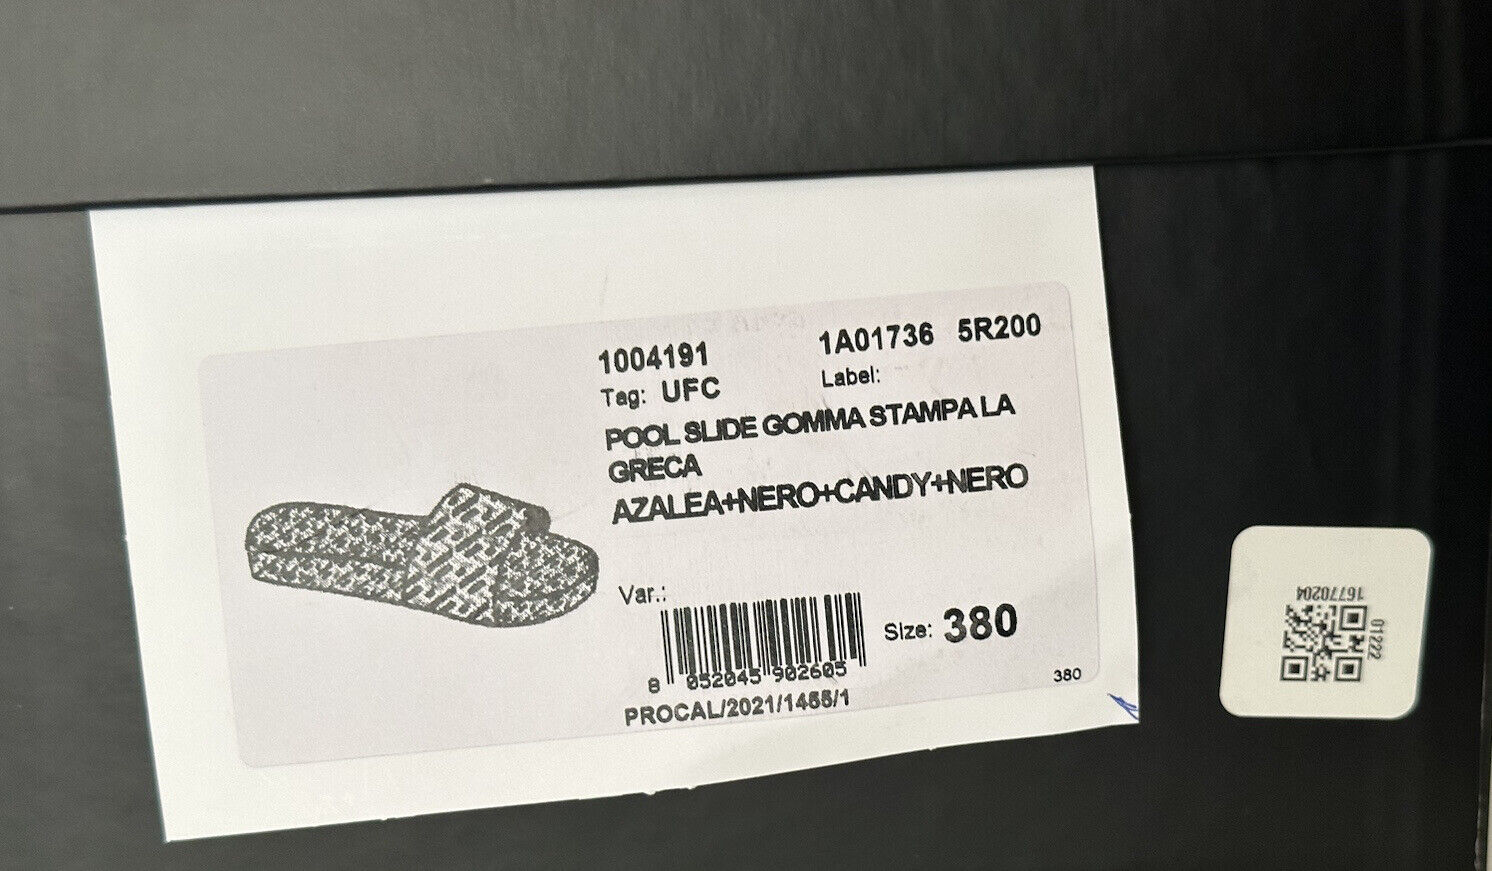 NIB Versace Женские шлепанцы Greca Signature 8 США (38 ЕС) 1004191 Италия 